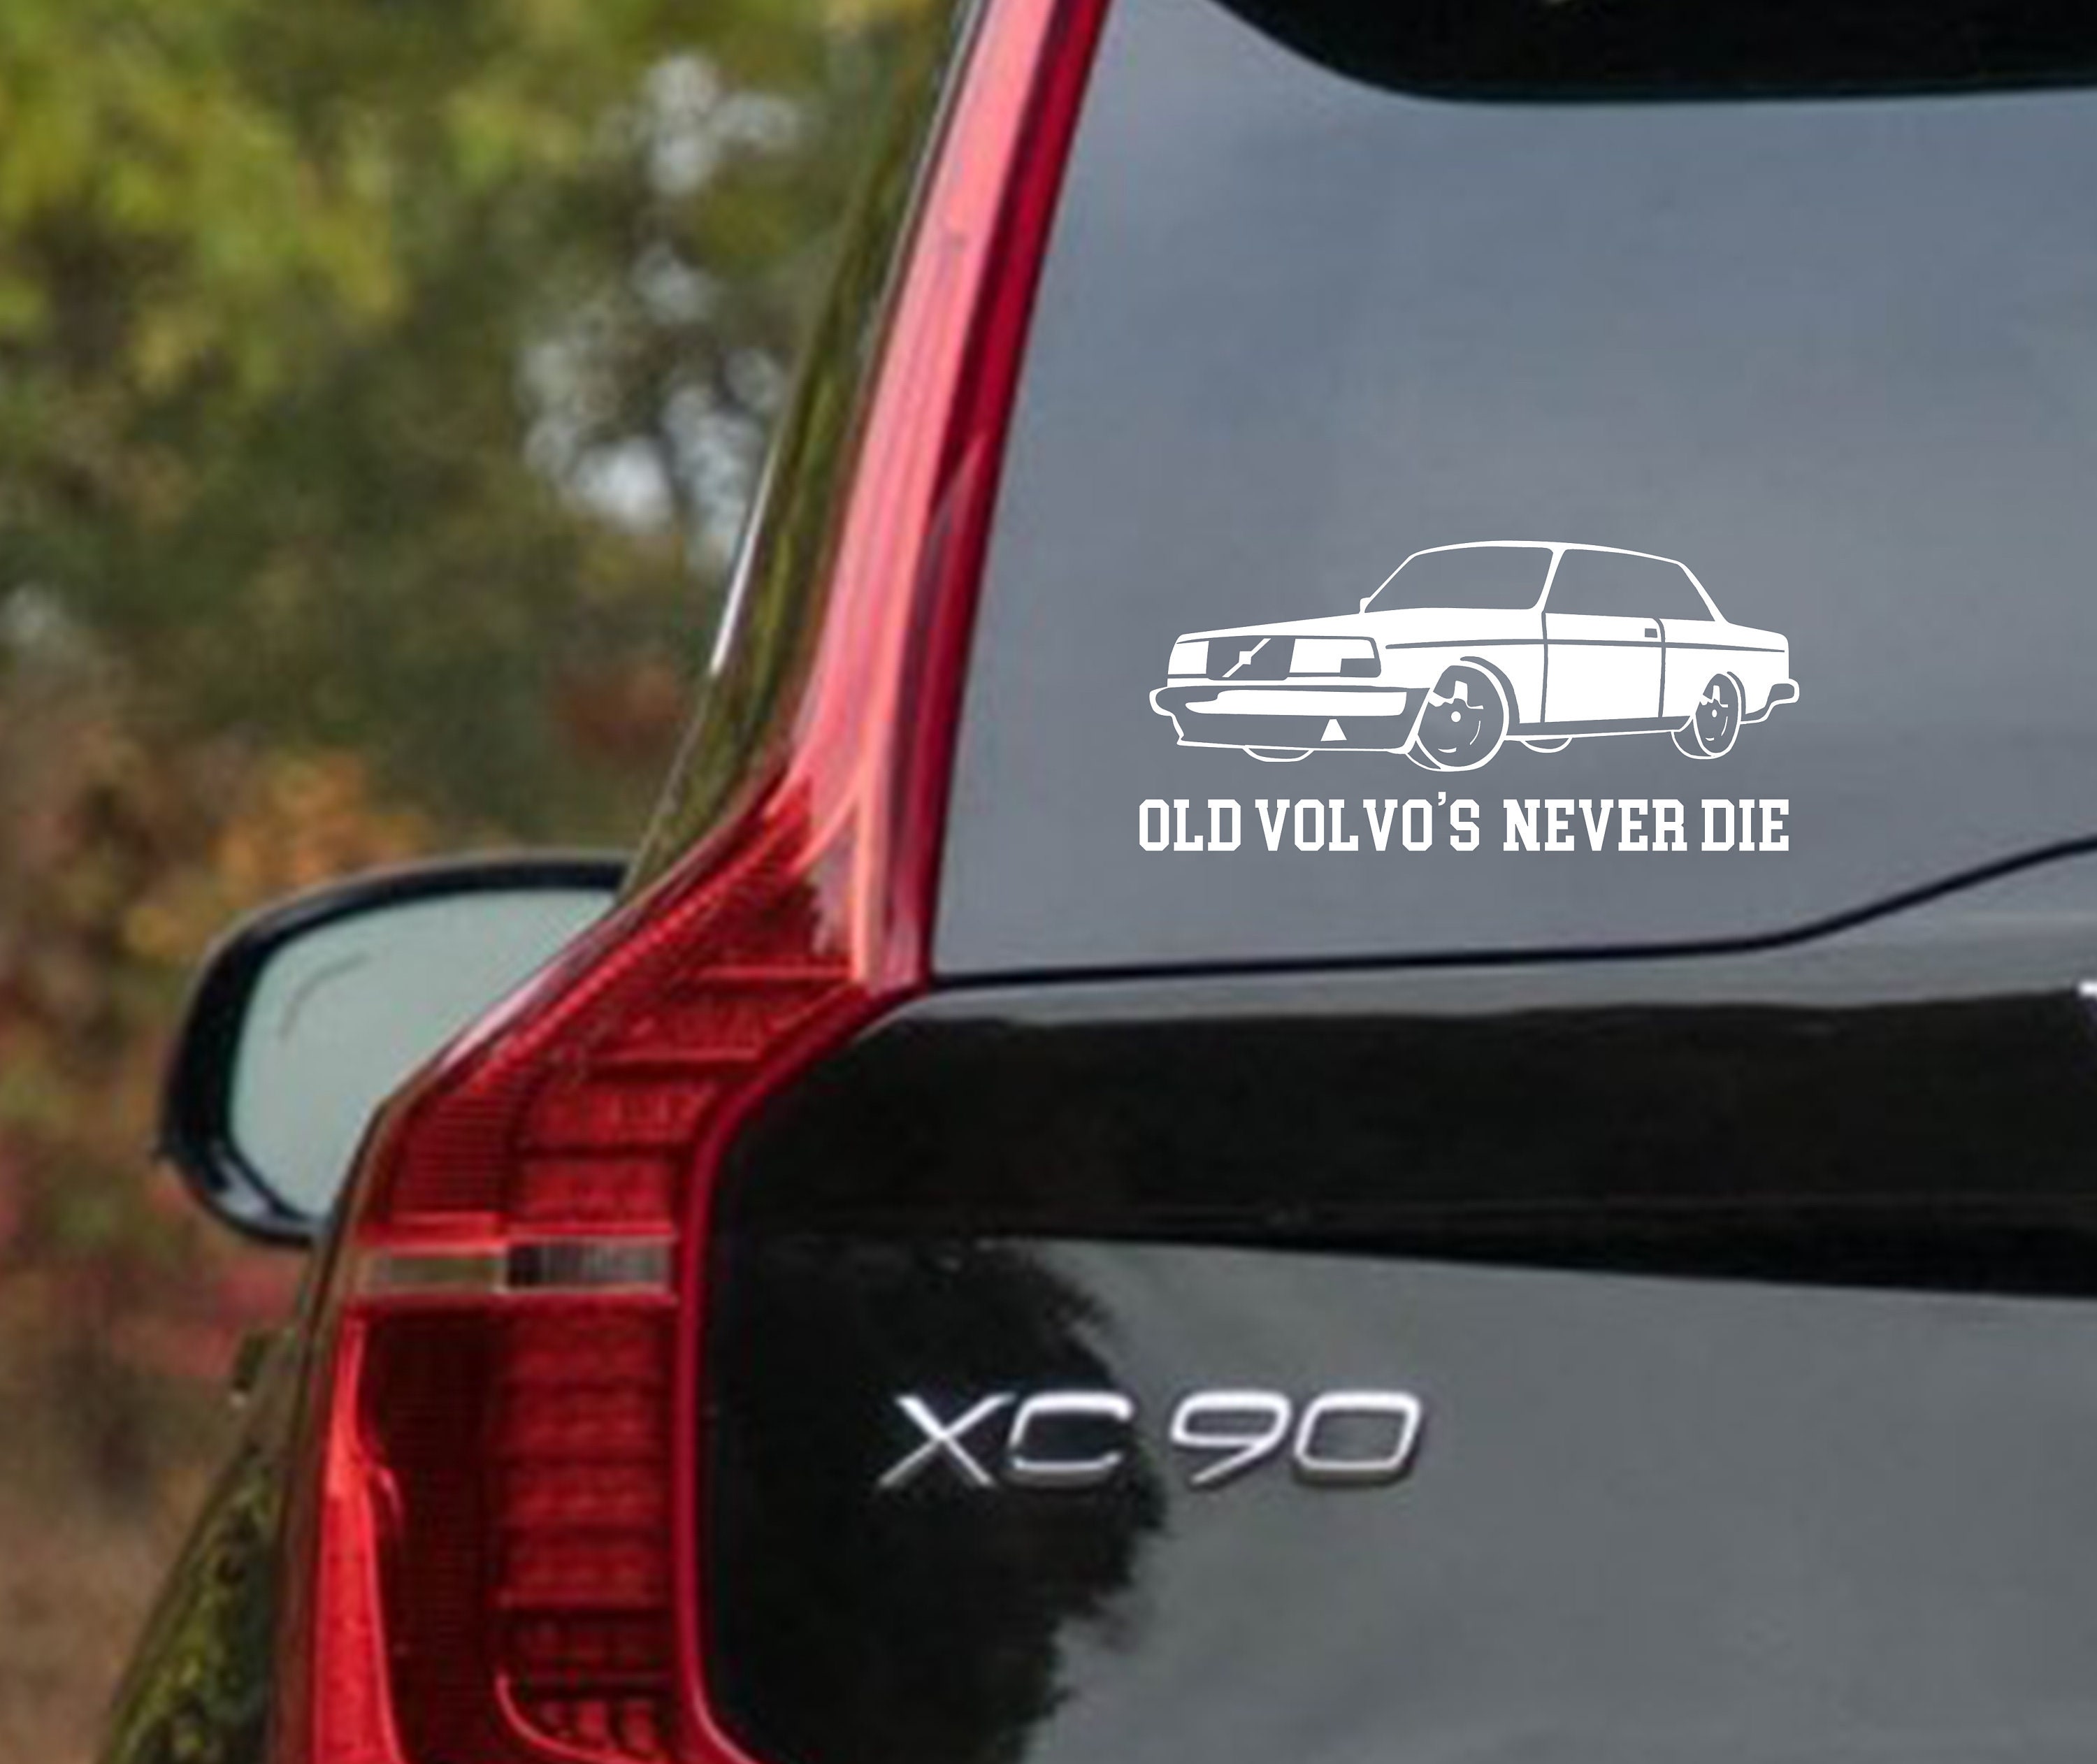 Old volvo's never die car decal / sticker / exterior decal / car window /  bumper sticker